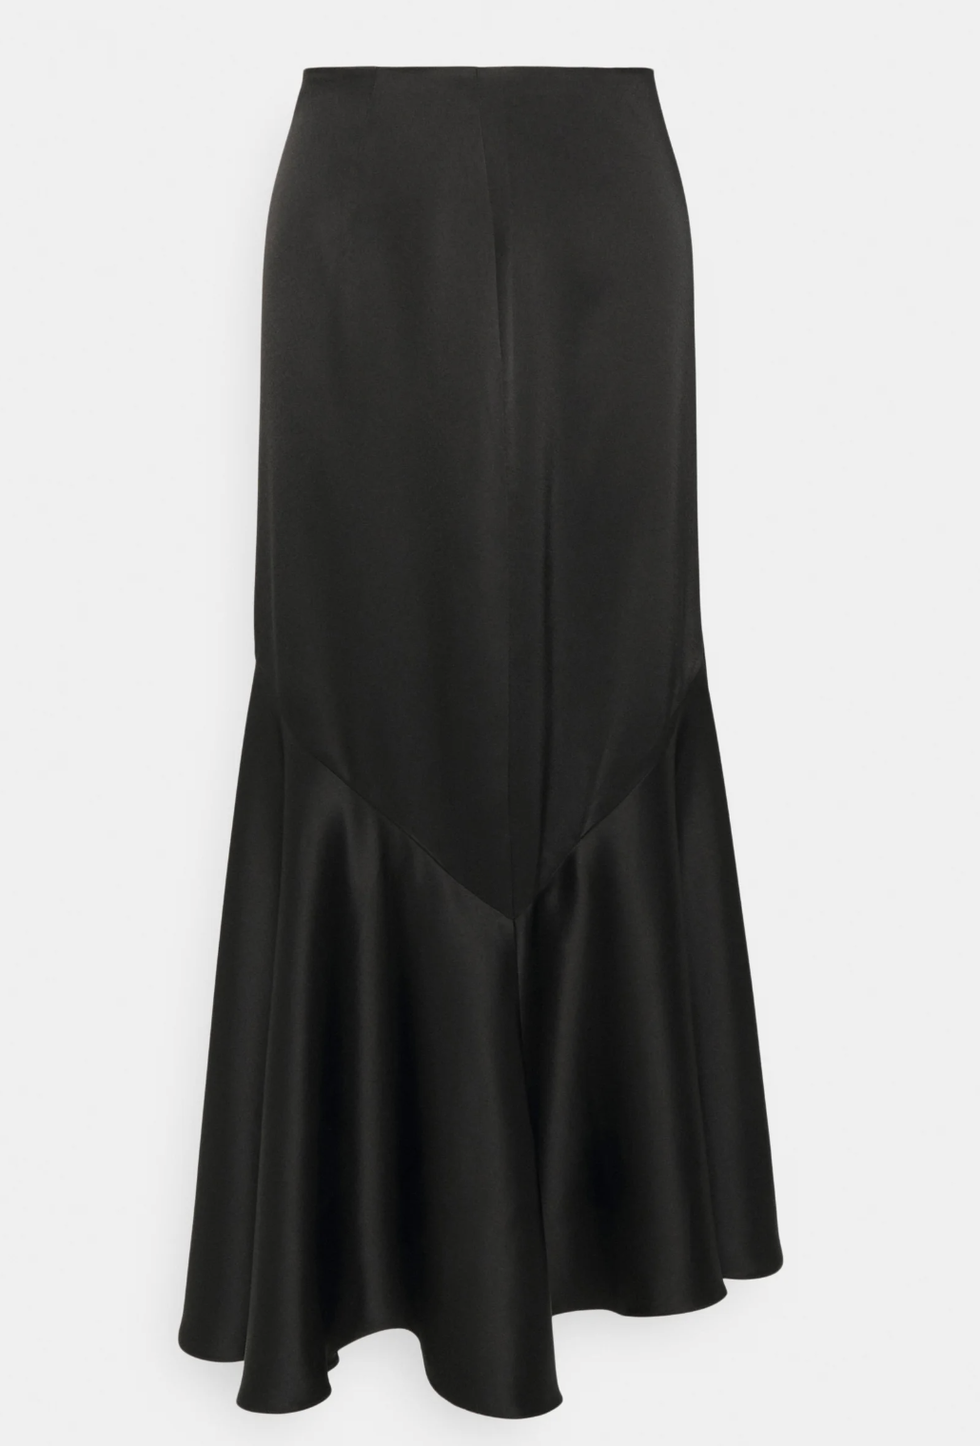 Polo ralph lauren black long skirt at zalando